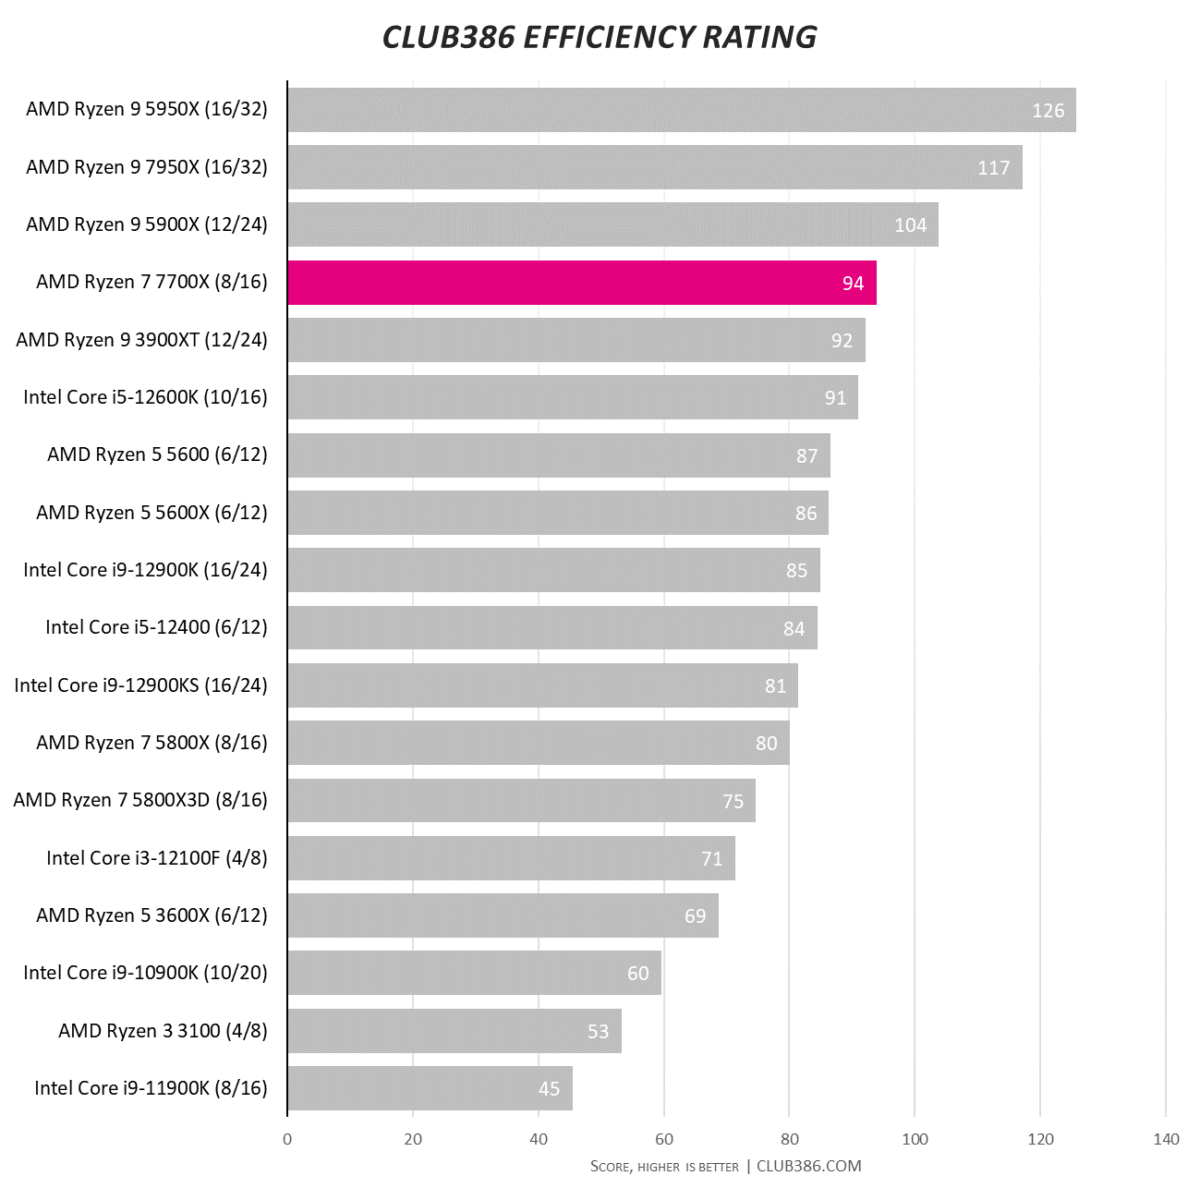 Club386 Efficiency Rating